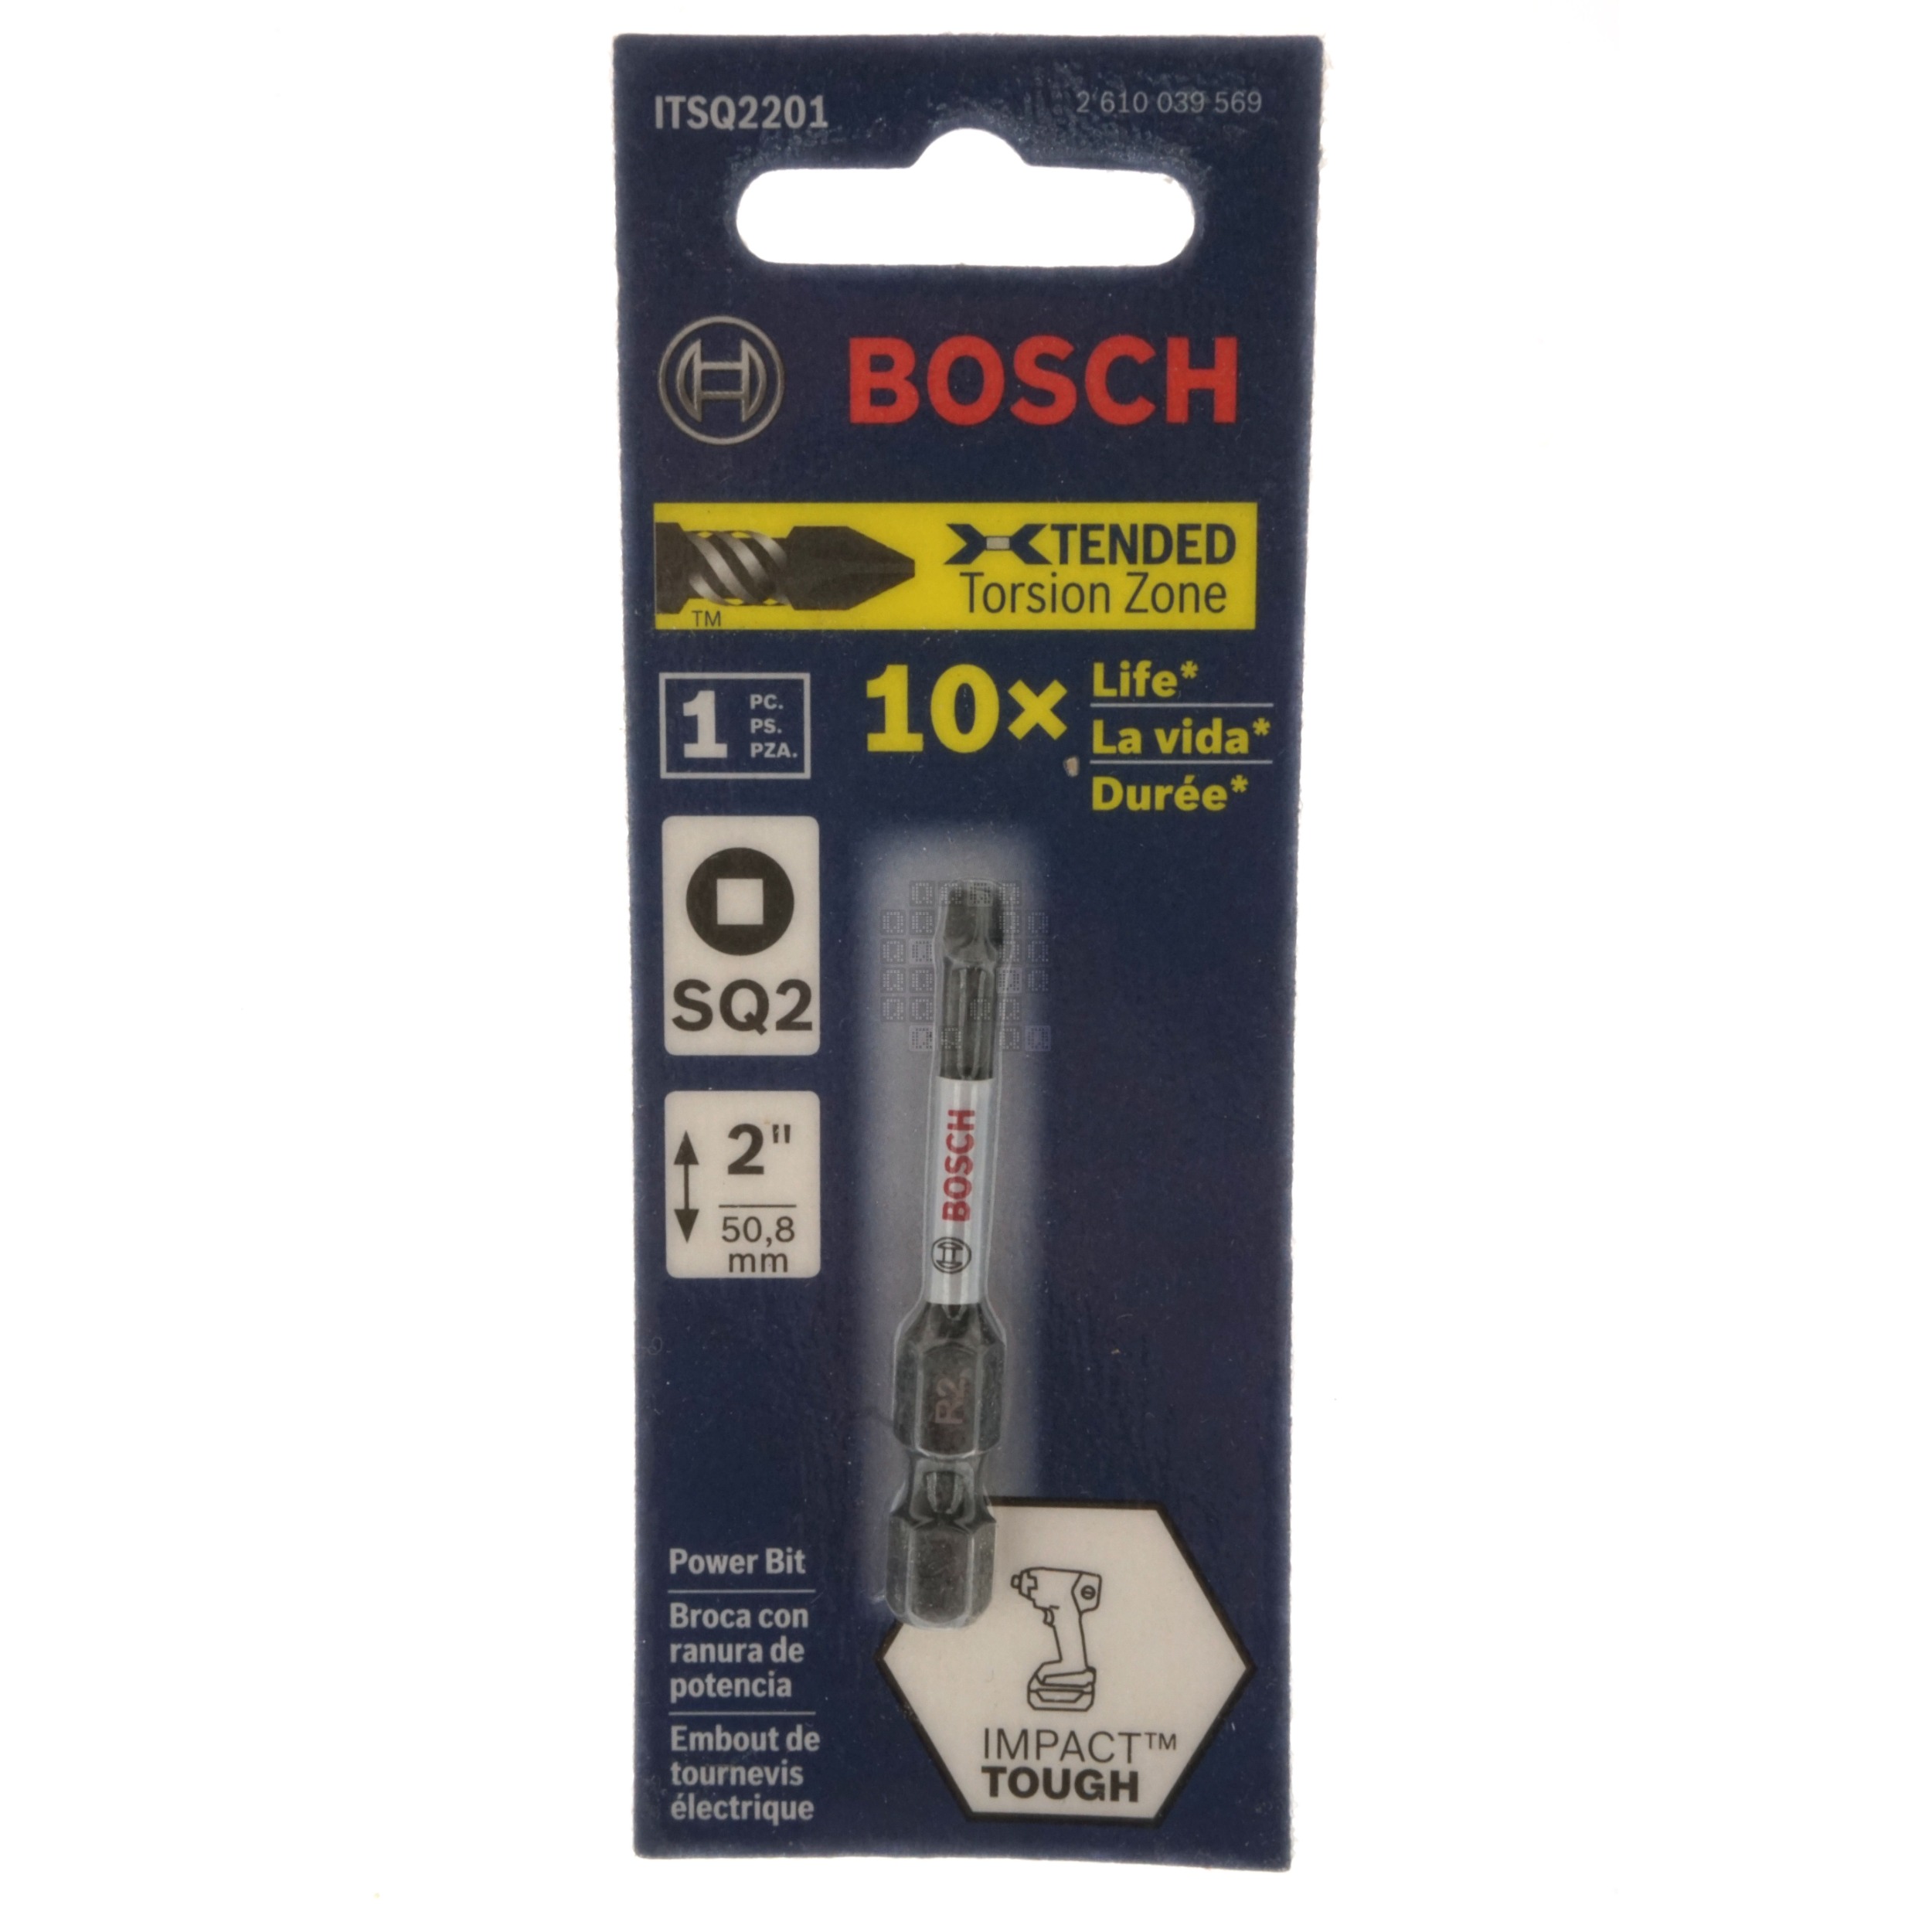 Bosch ITSQ2201 Impact Tough SQ2 #2 Square Insert Bit, 2" Length, 2610039569